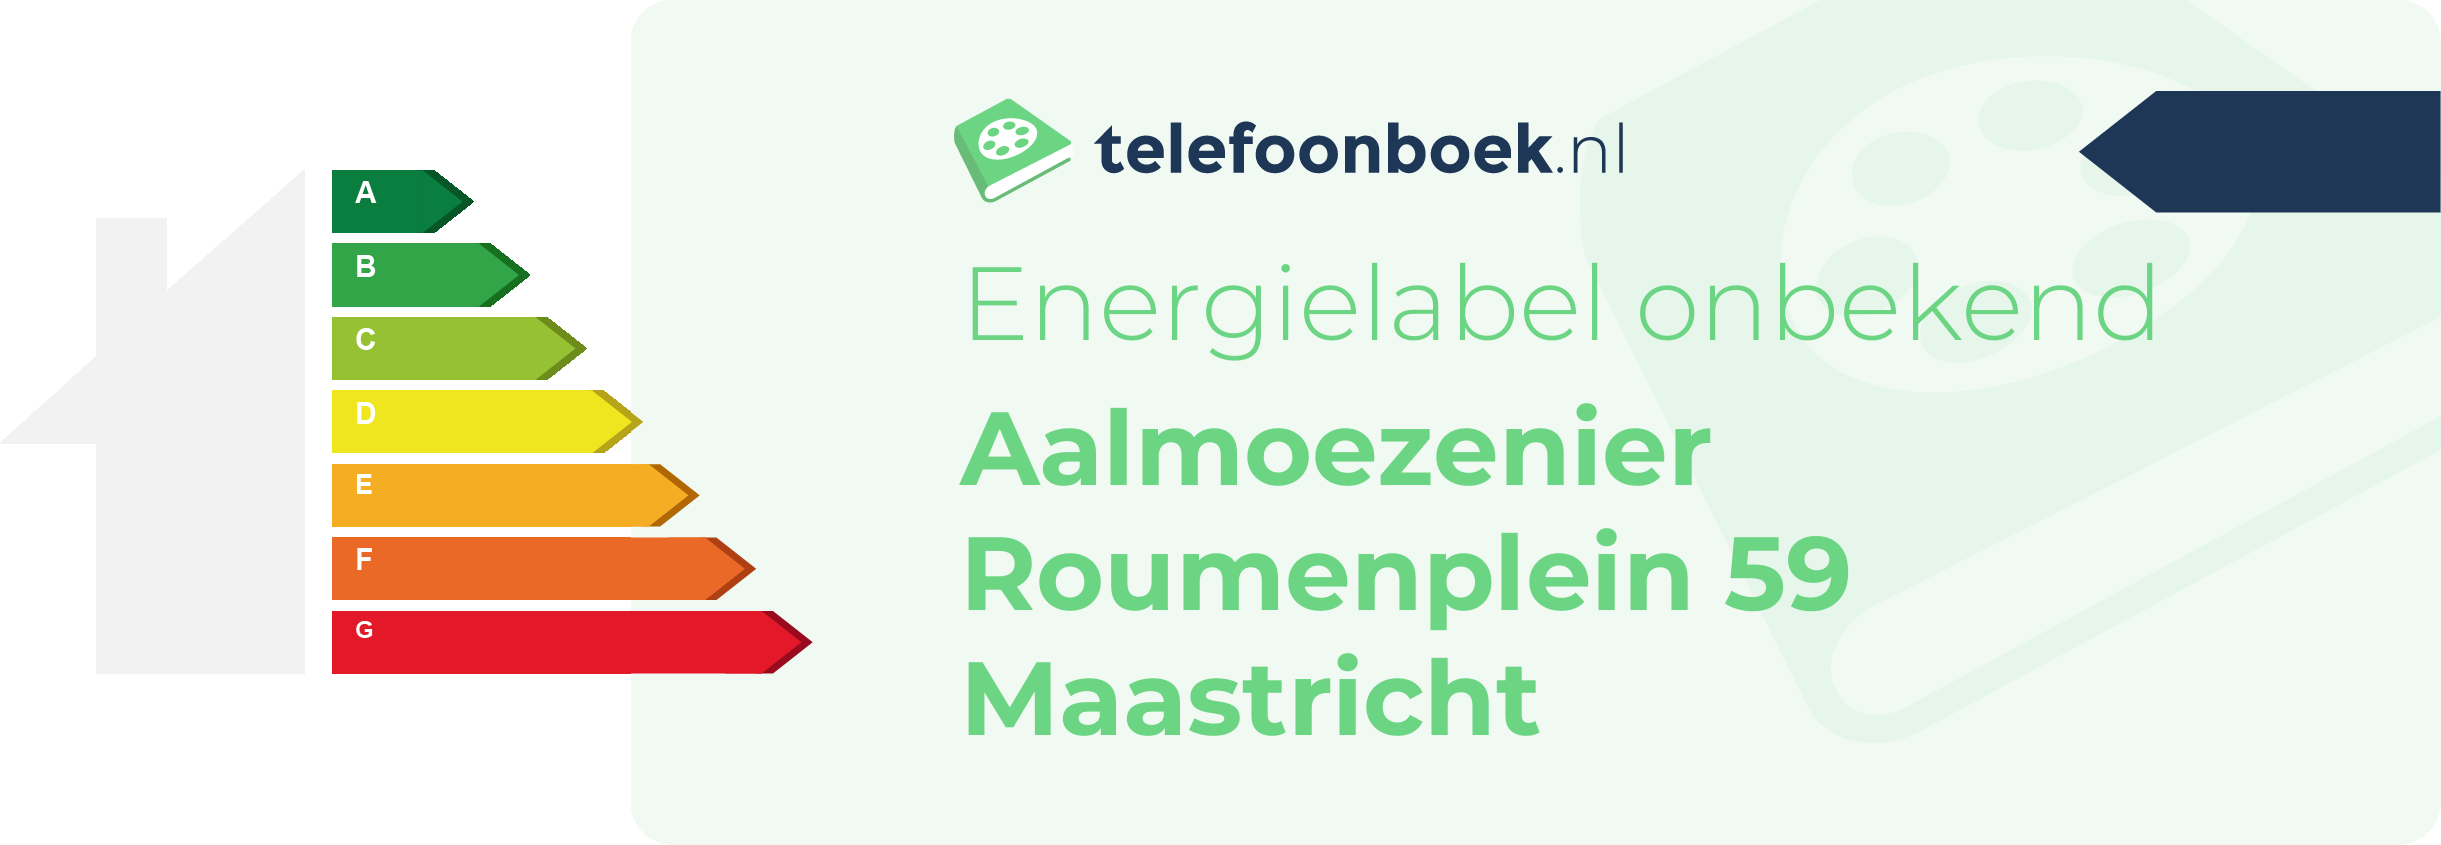 Energielabel Aalmoezenier Roumenplein 59 Maastricht